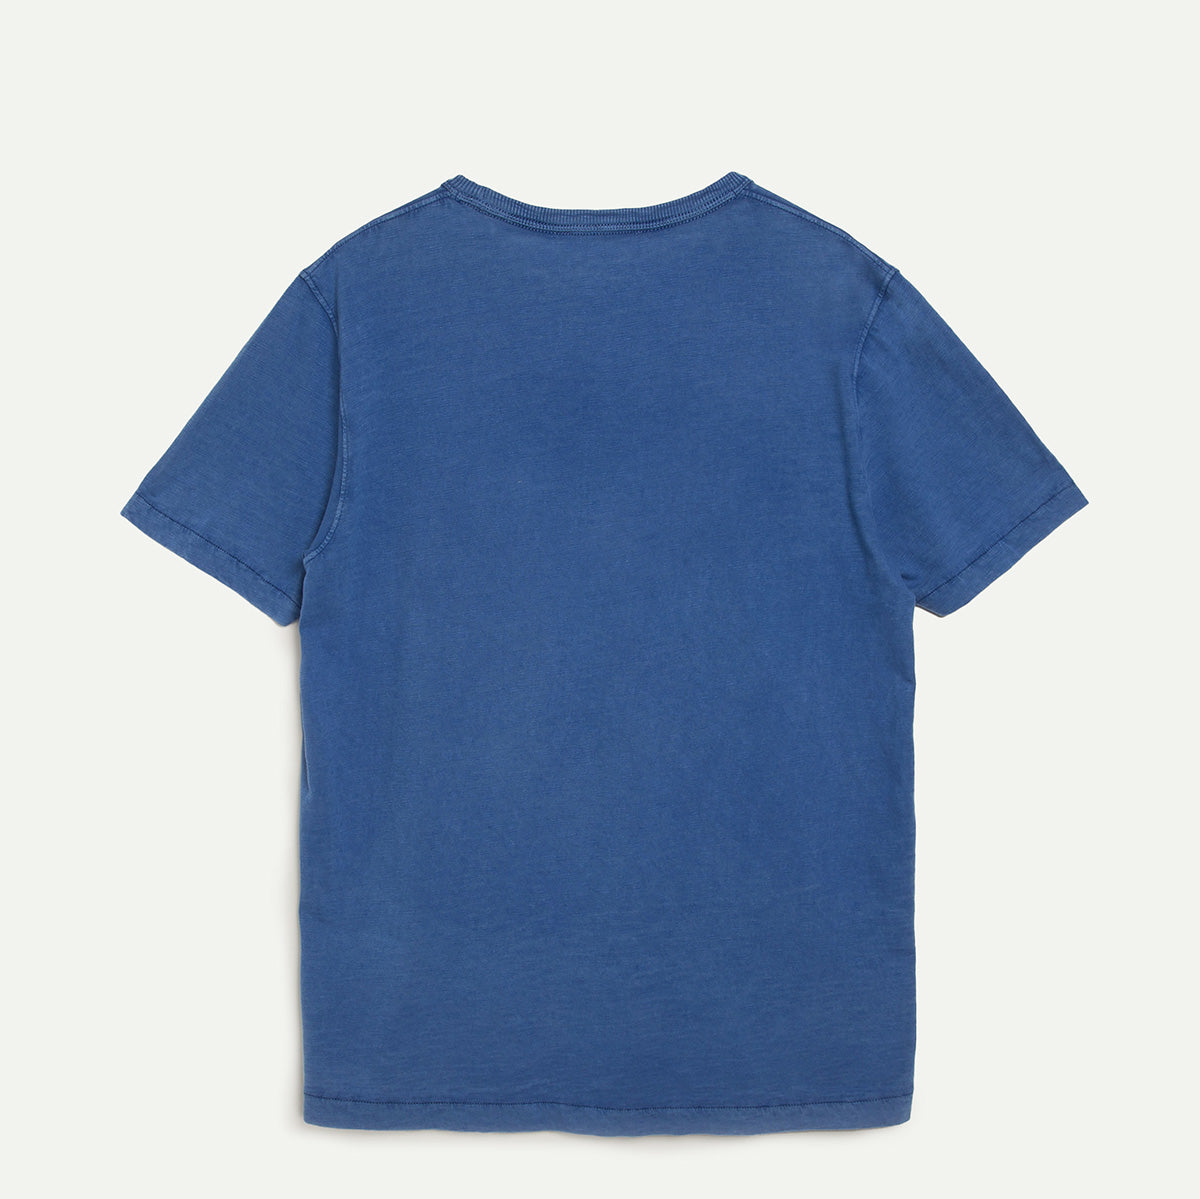 YMC Blue Wild Ones Pocket T Shirt